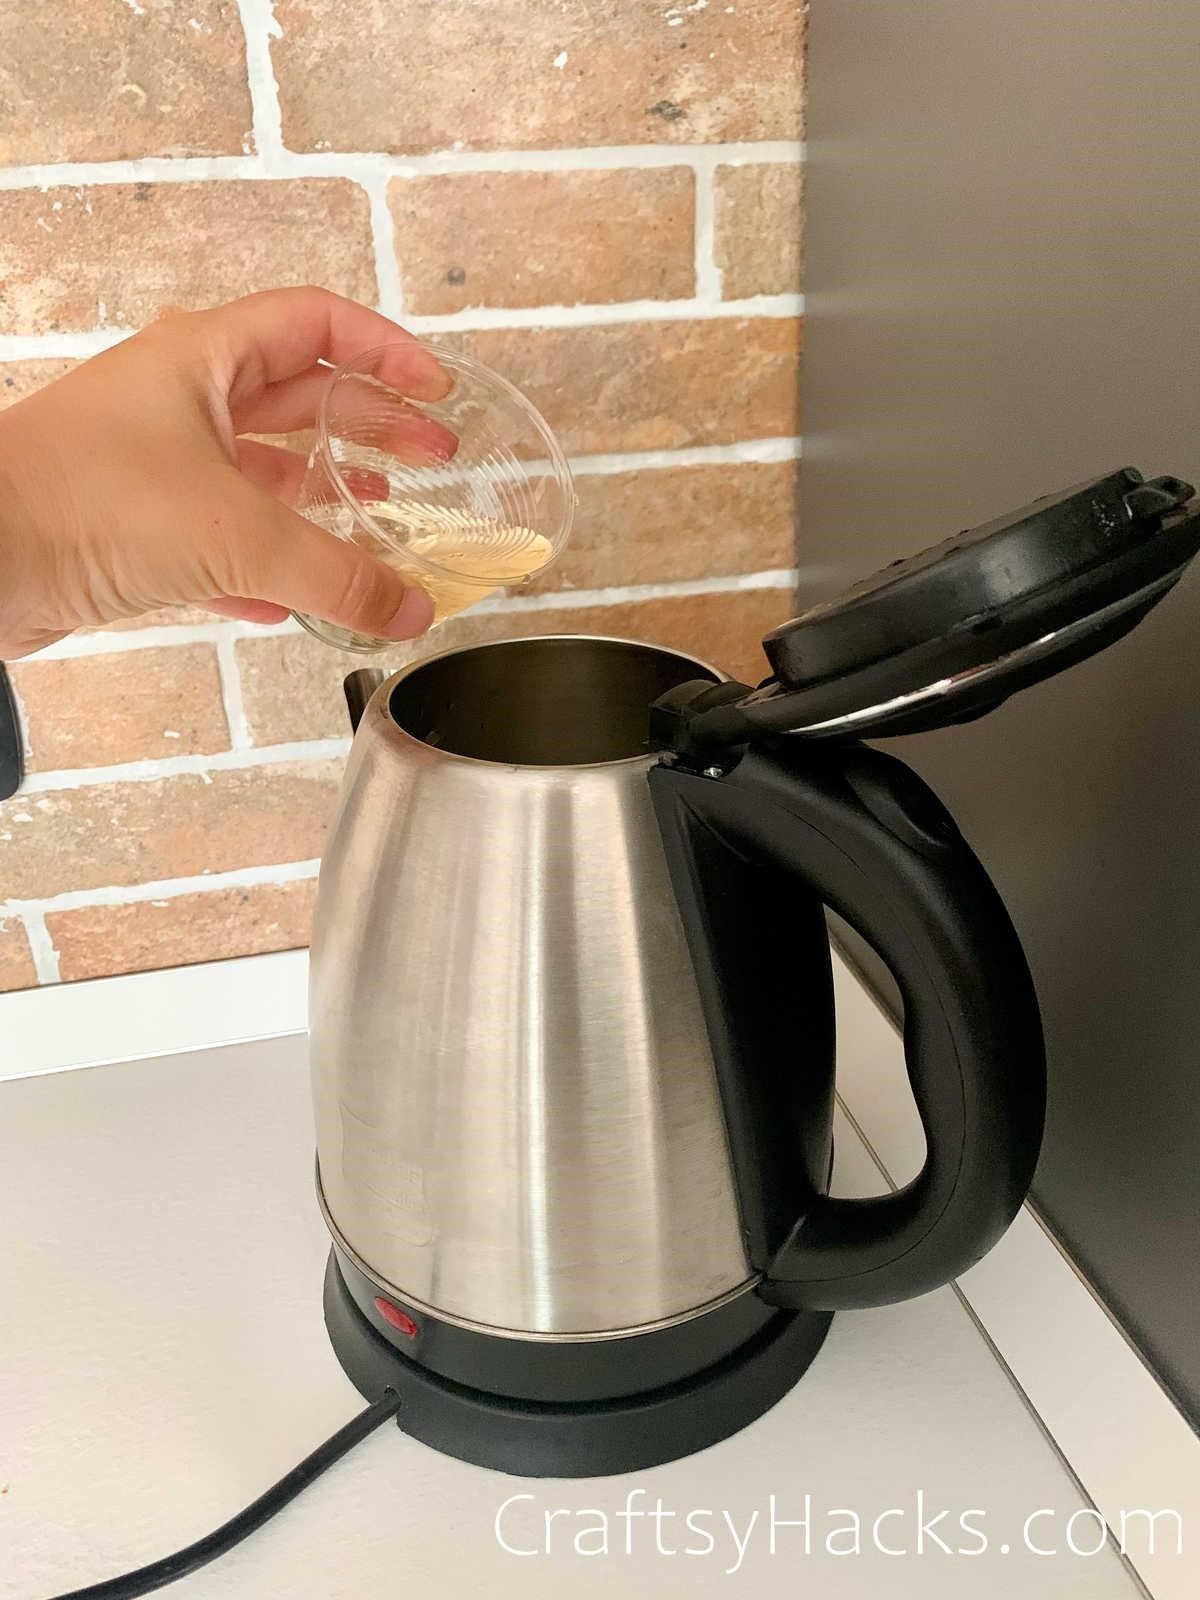 using white vinegar to descale kettle